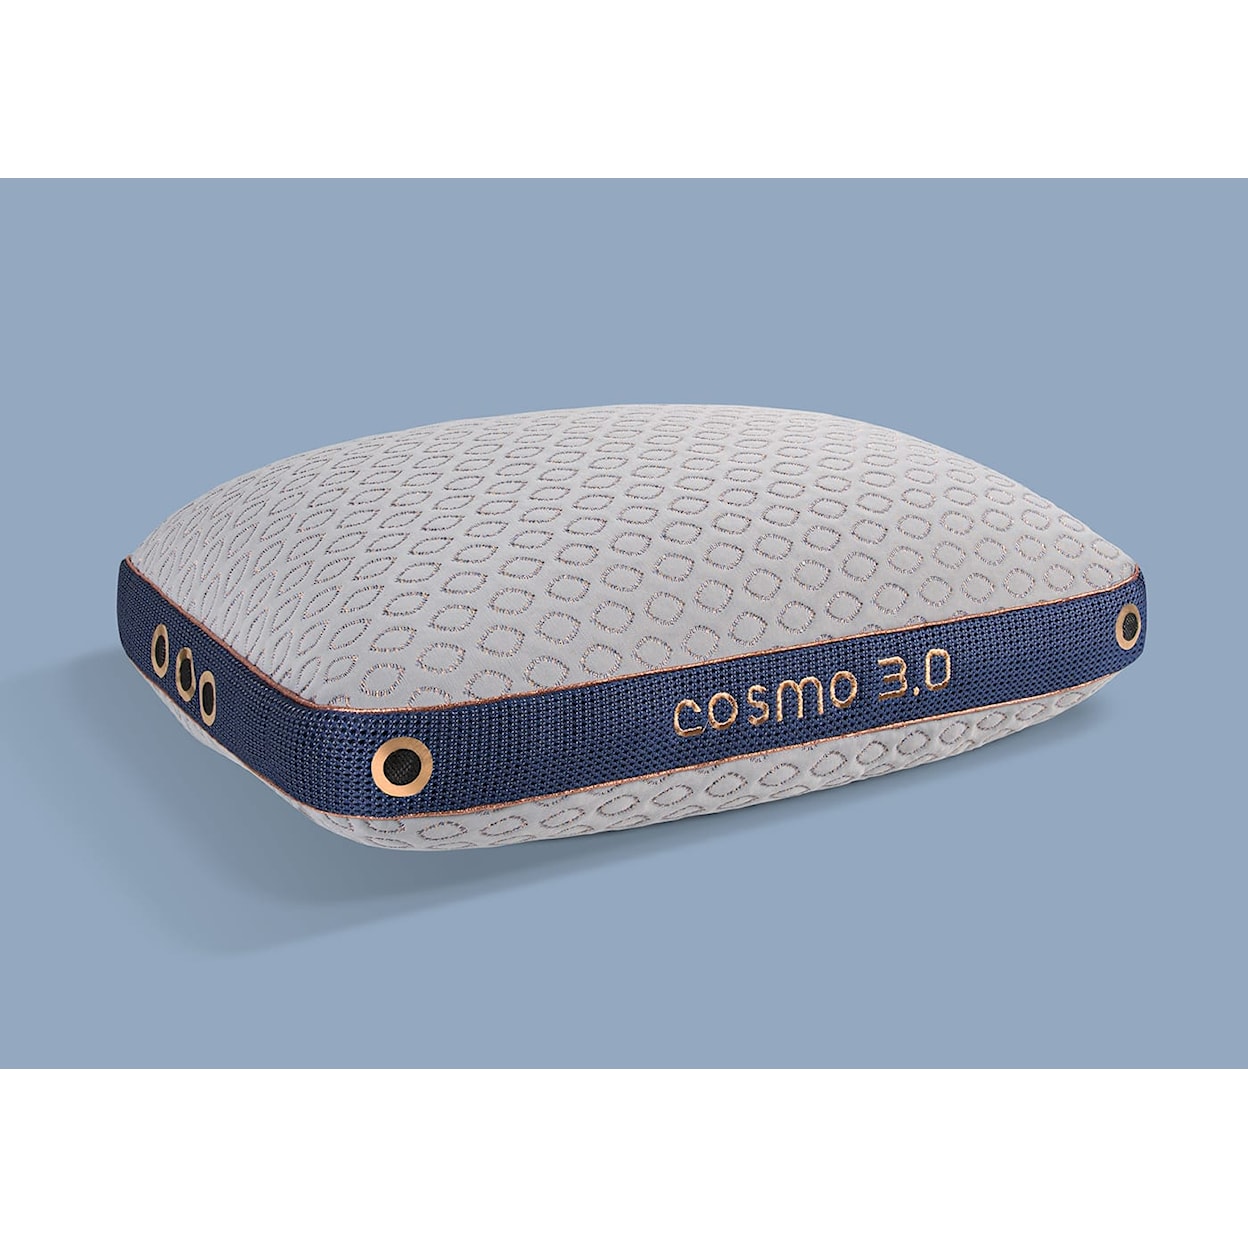 Bedgear Cosmo Pillows Cosmo Performance Pillow-3.0